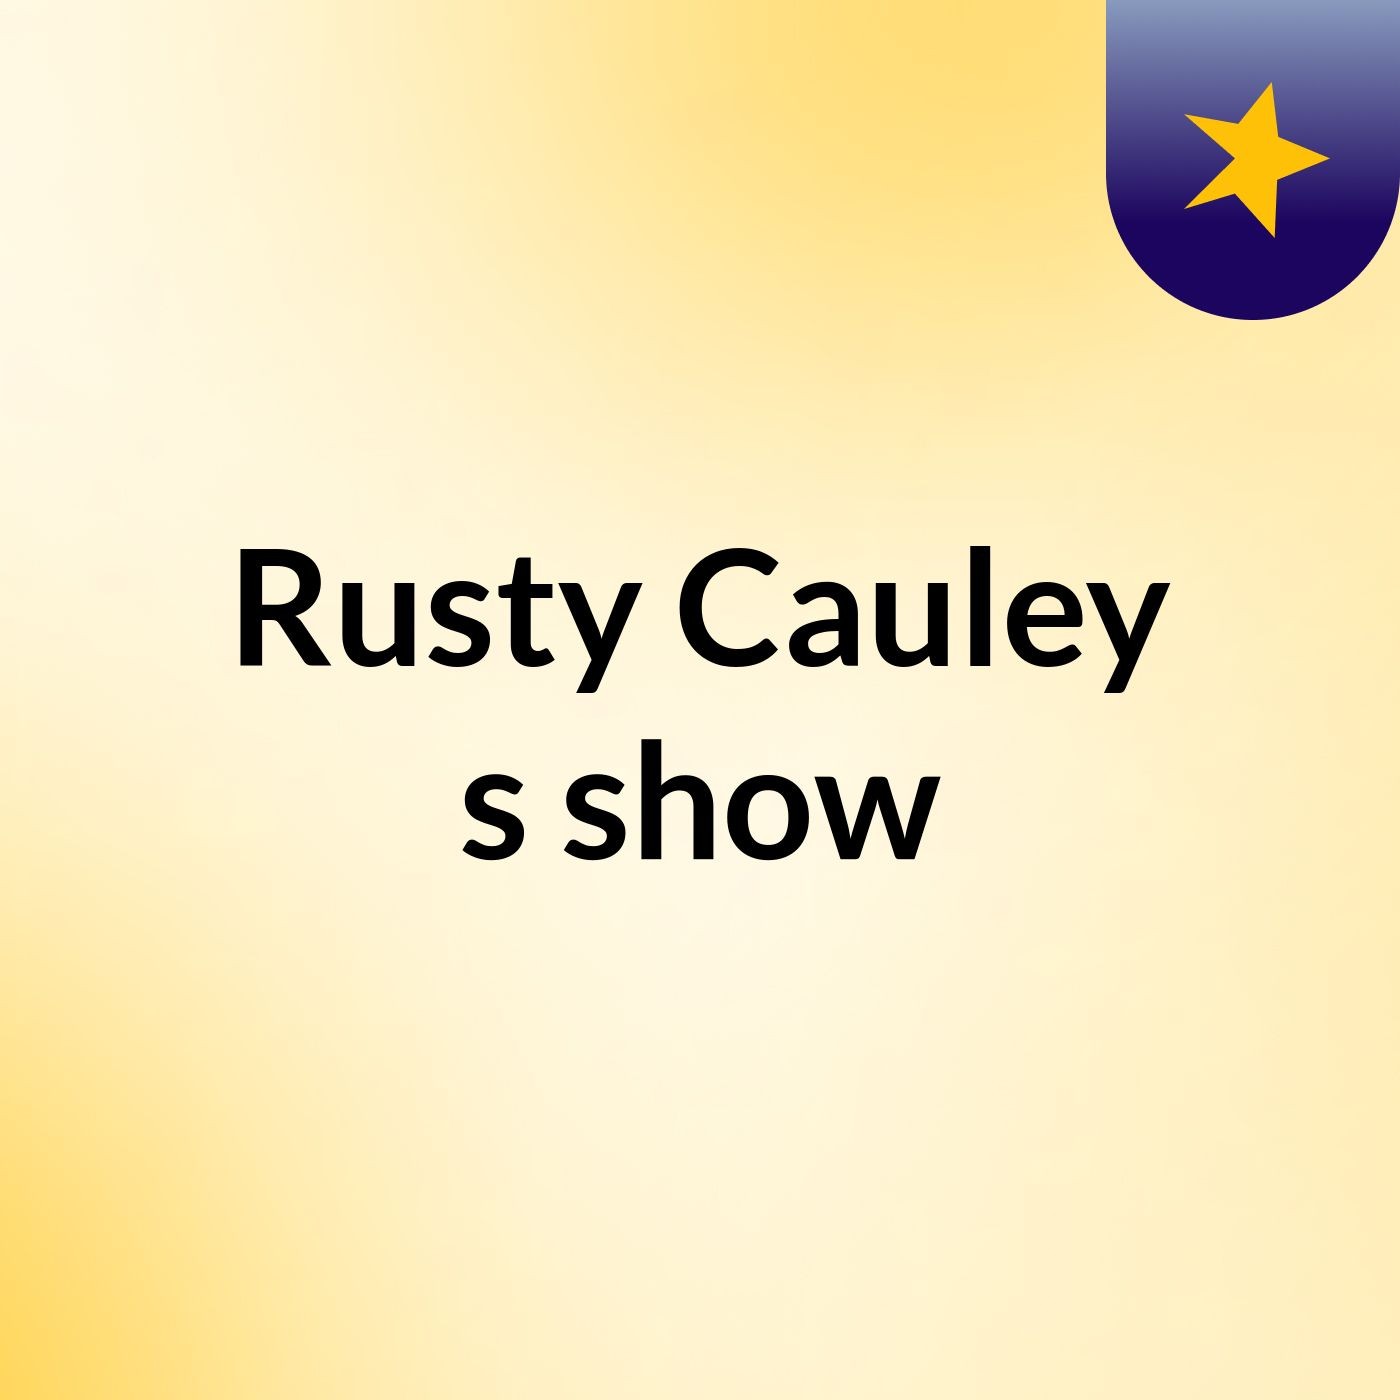 Rusty Cauley's show